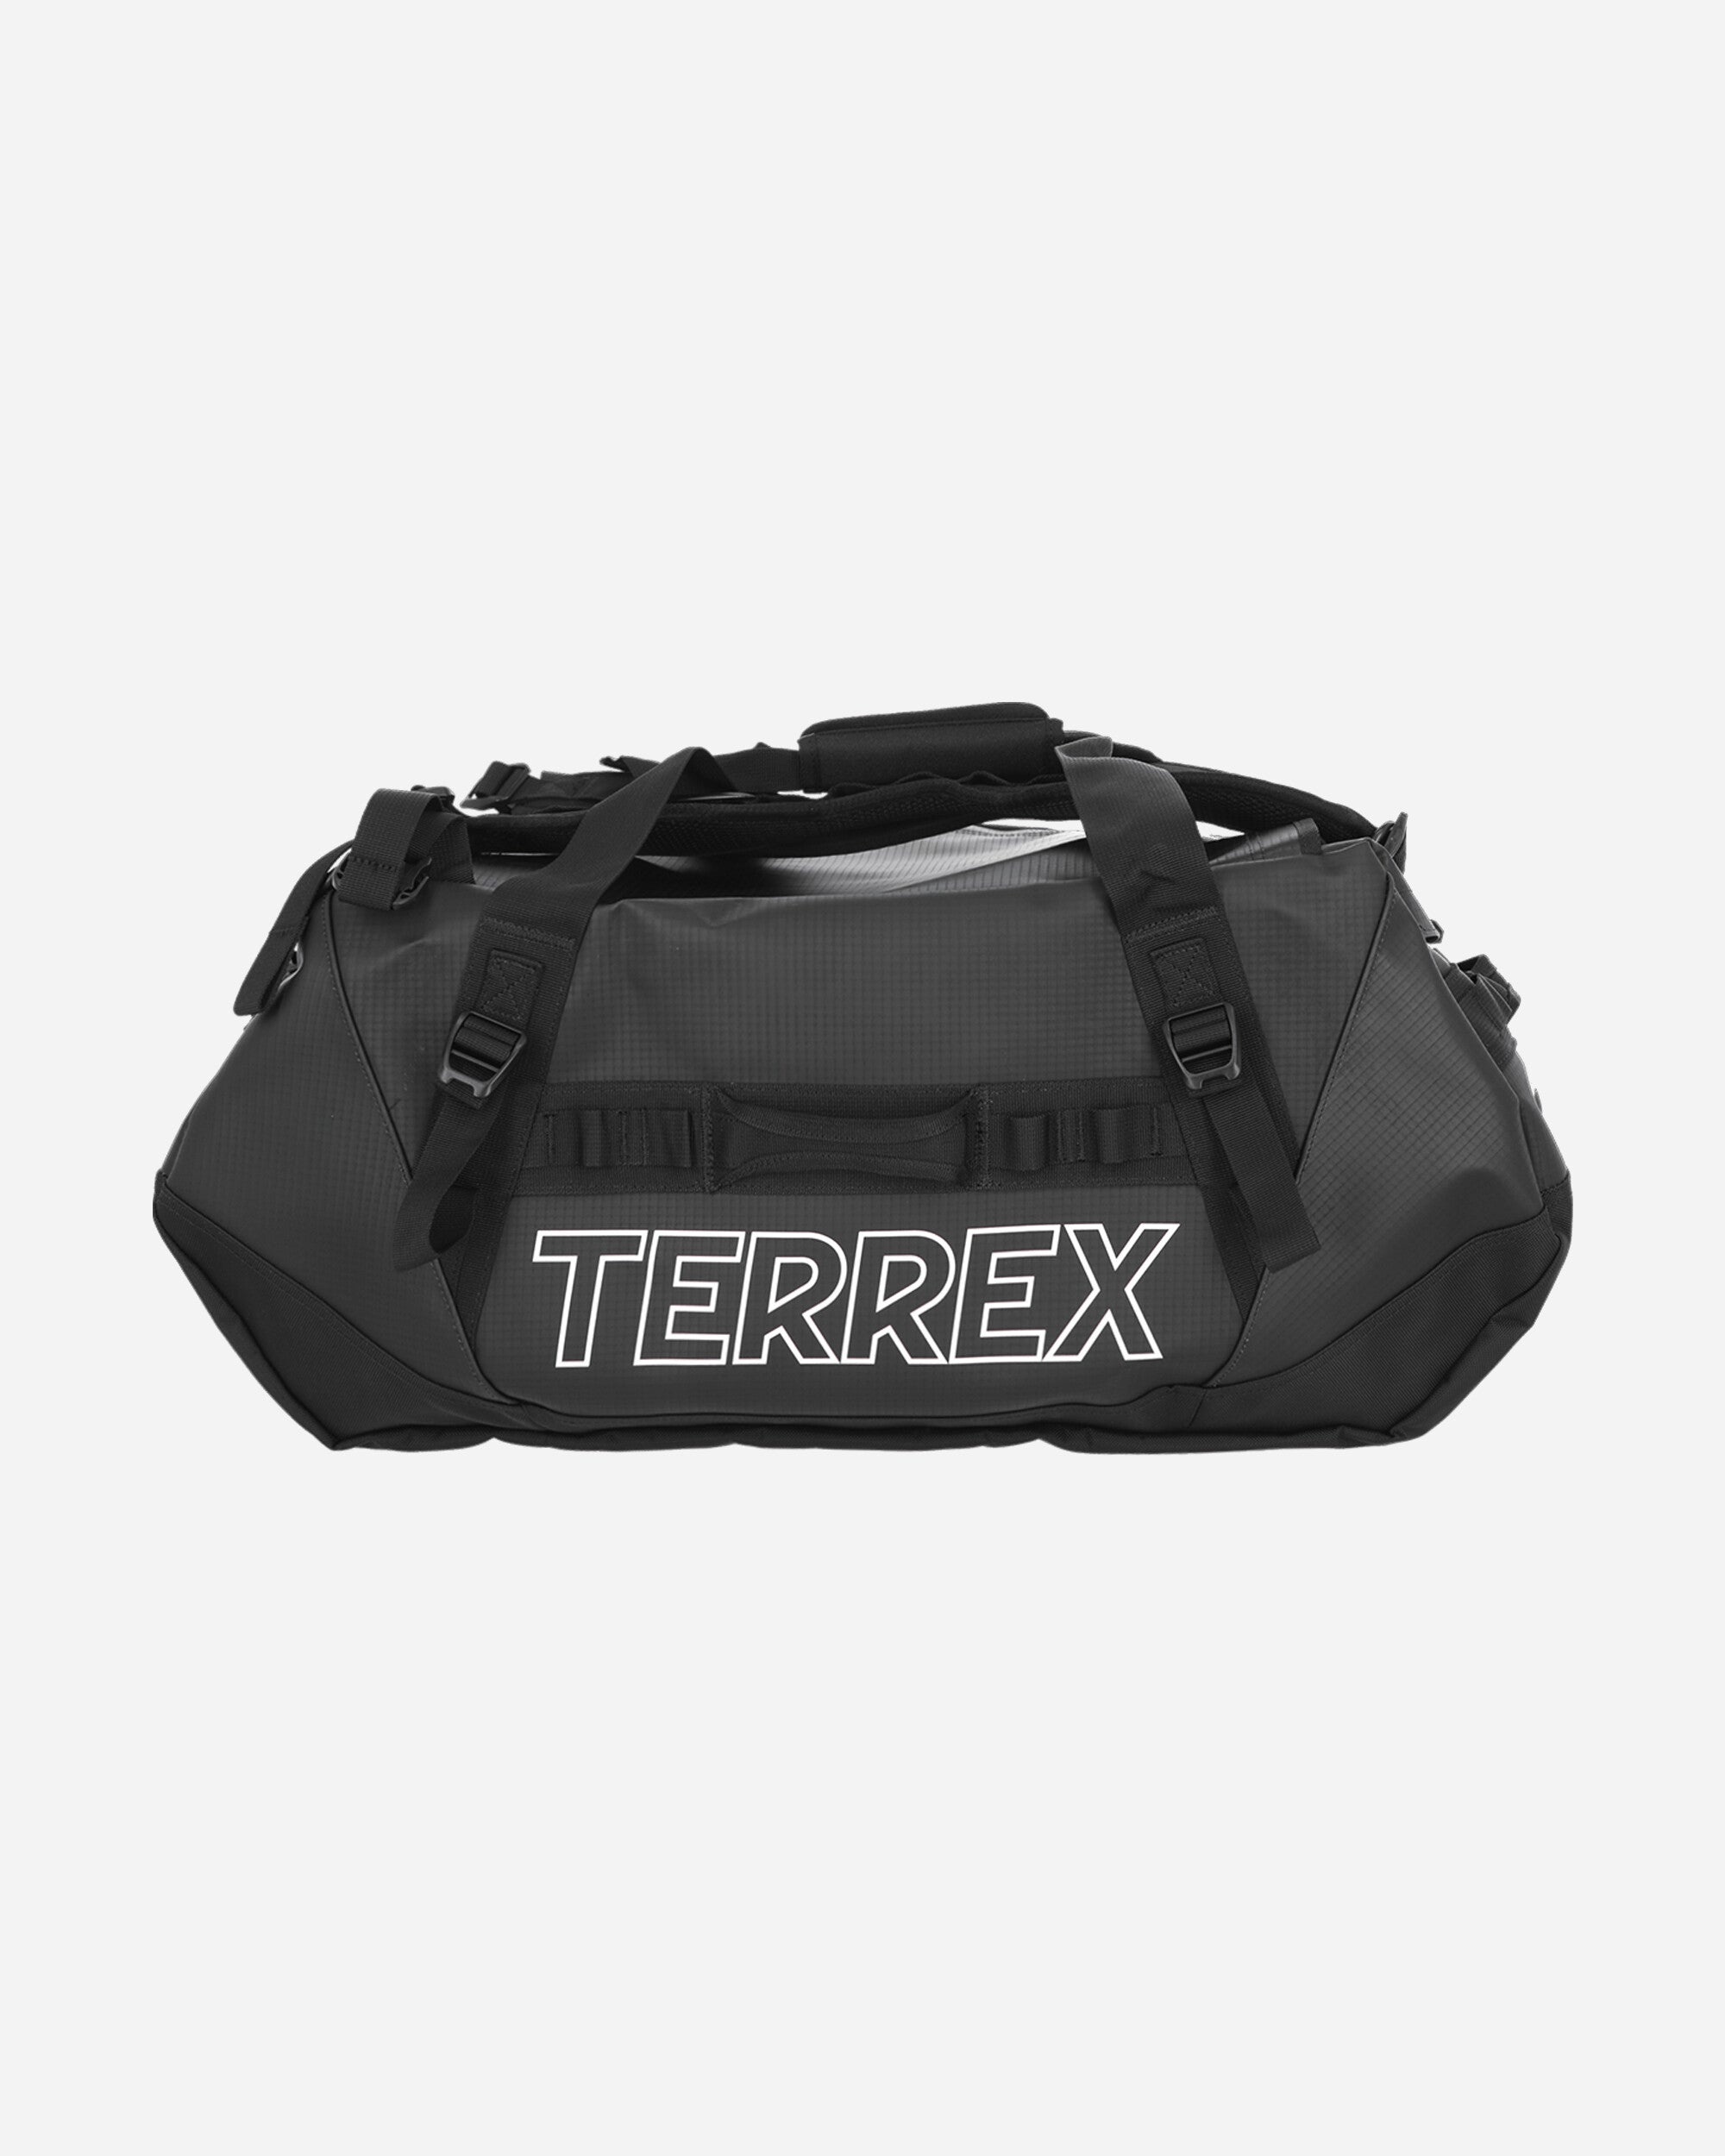 TERREX Expedition Duffel Bag Medium Black - 4